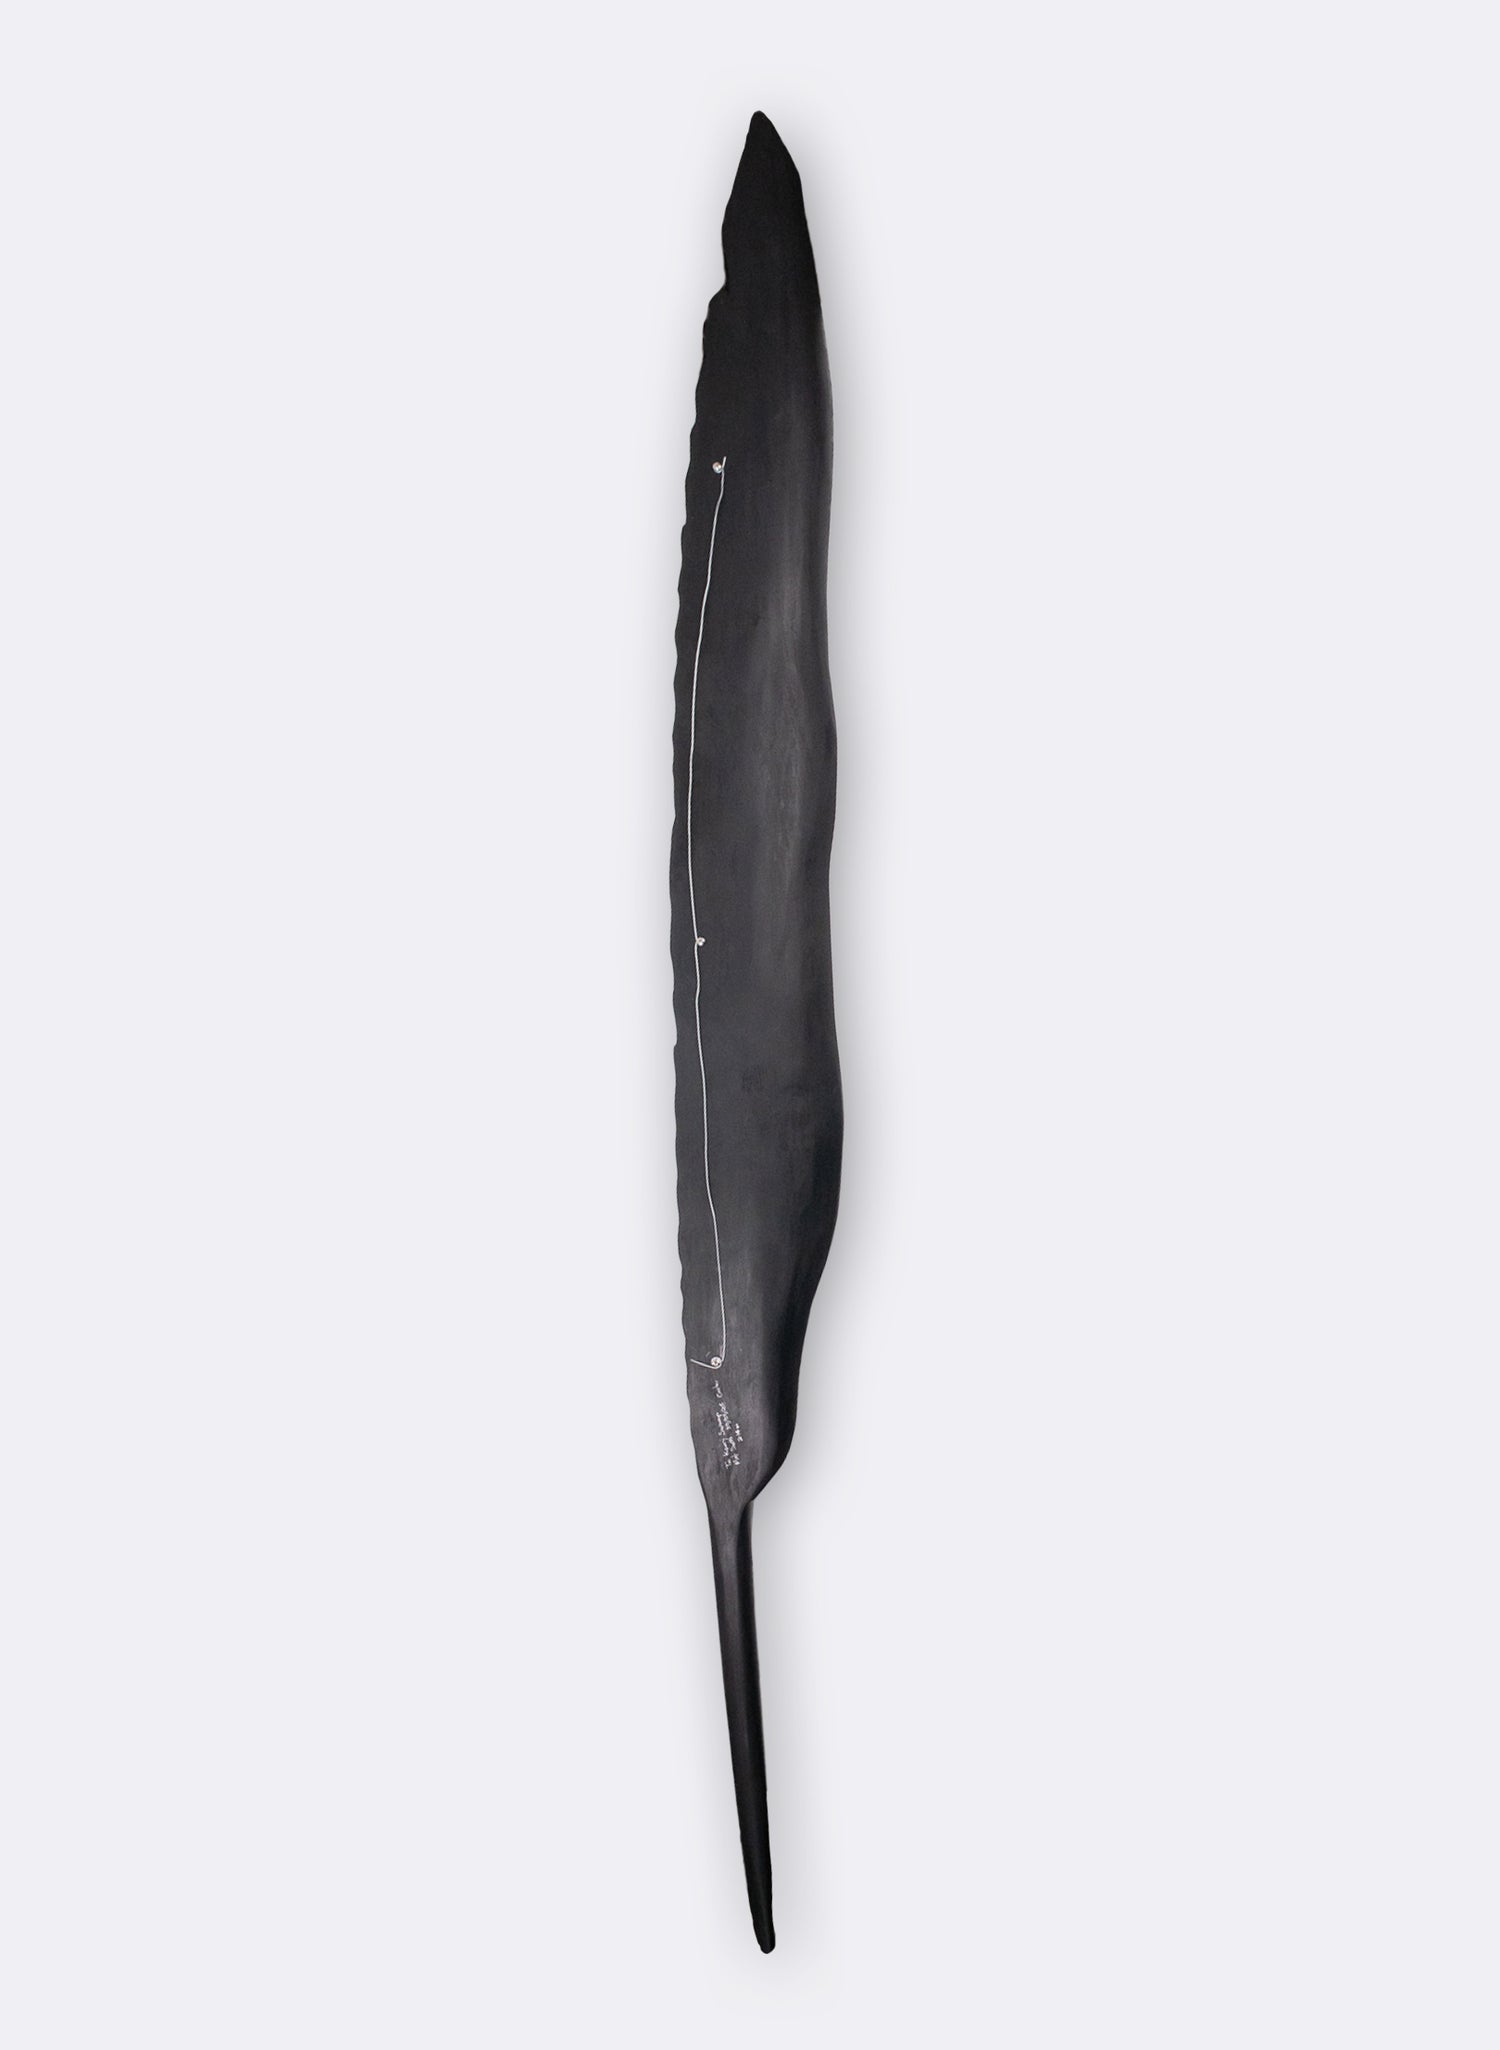 Point Chev Tui Feather 2140mm - Black Kauri